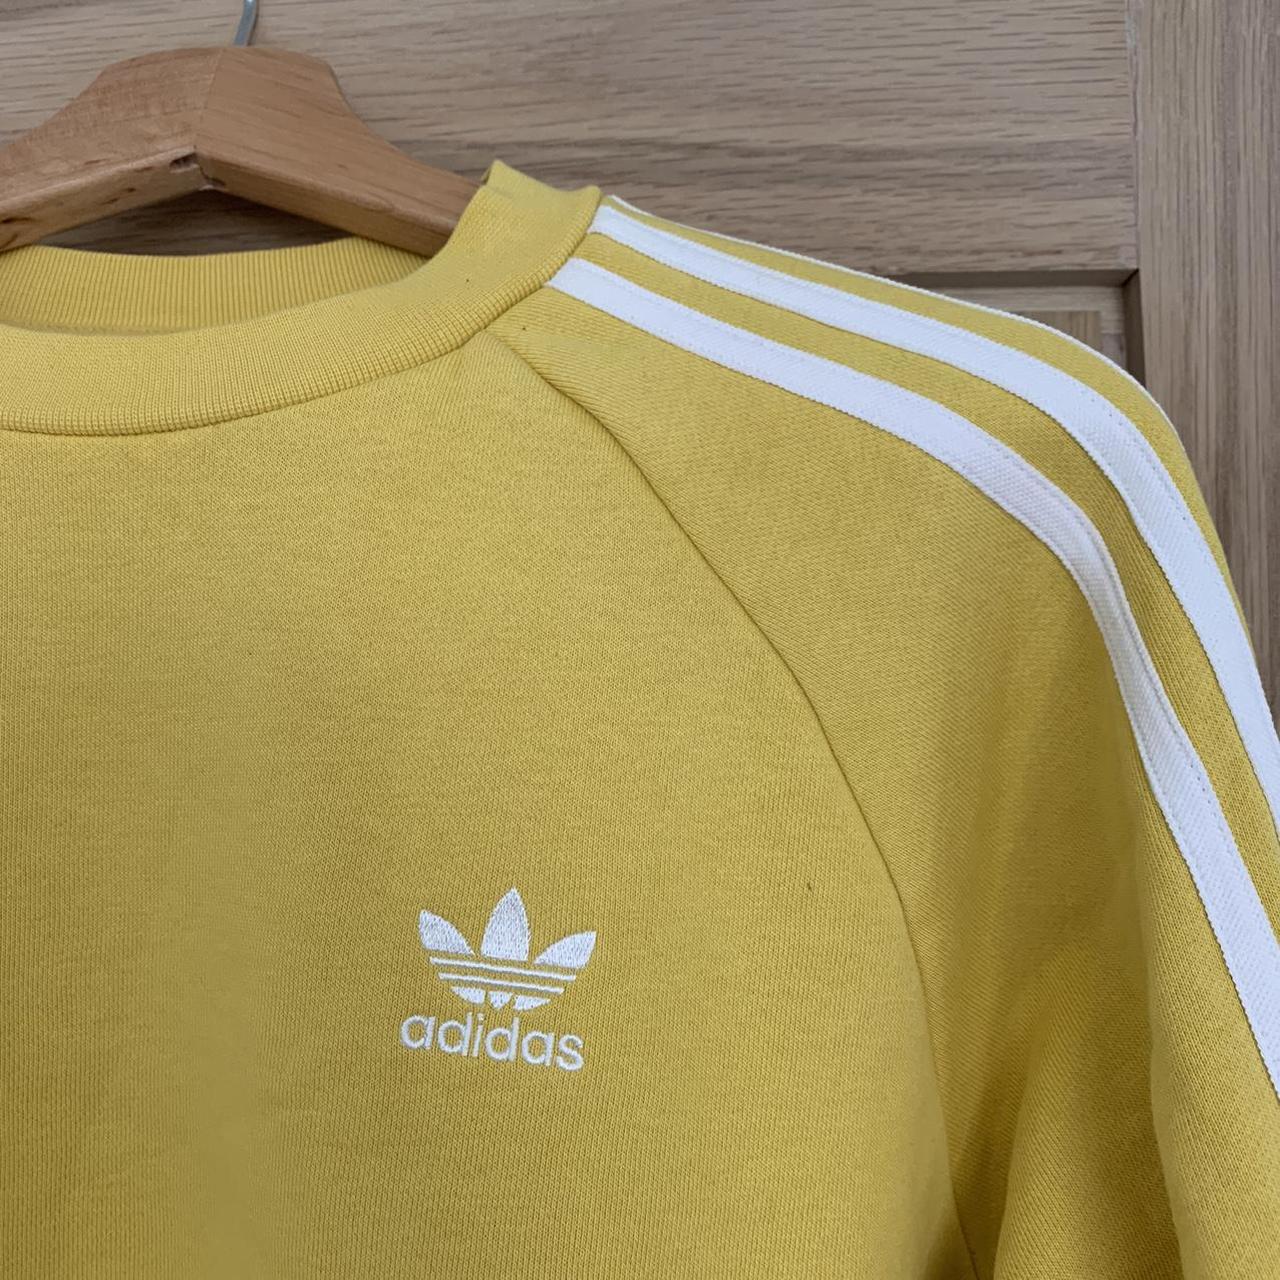 Adidas originals yellow oversized sweatshirt - never... - Depop